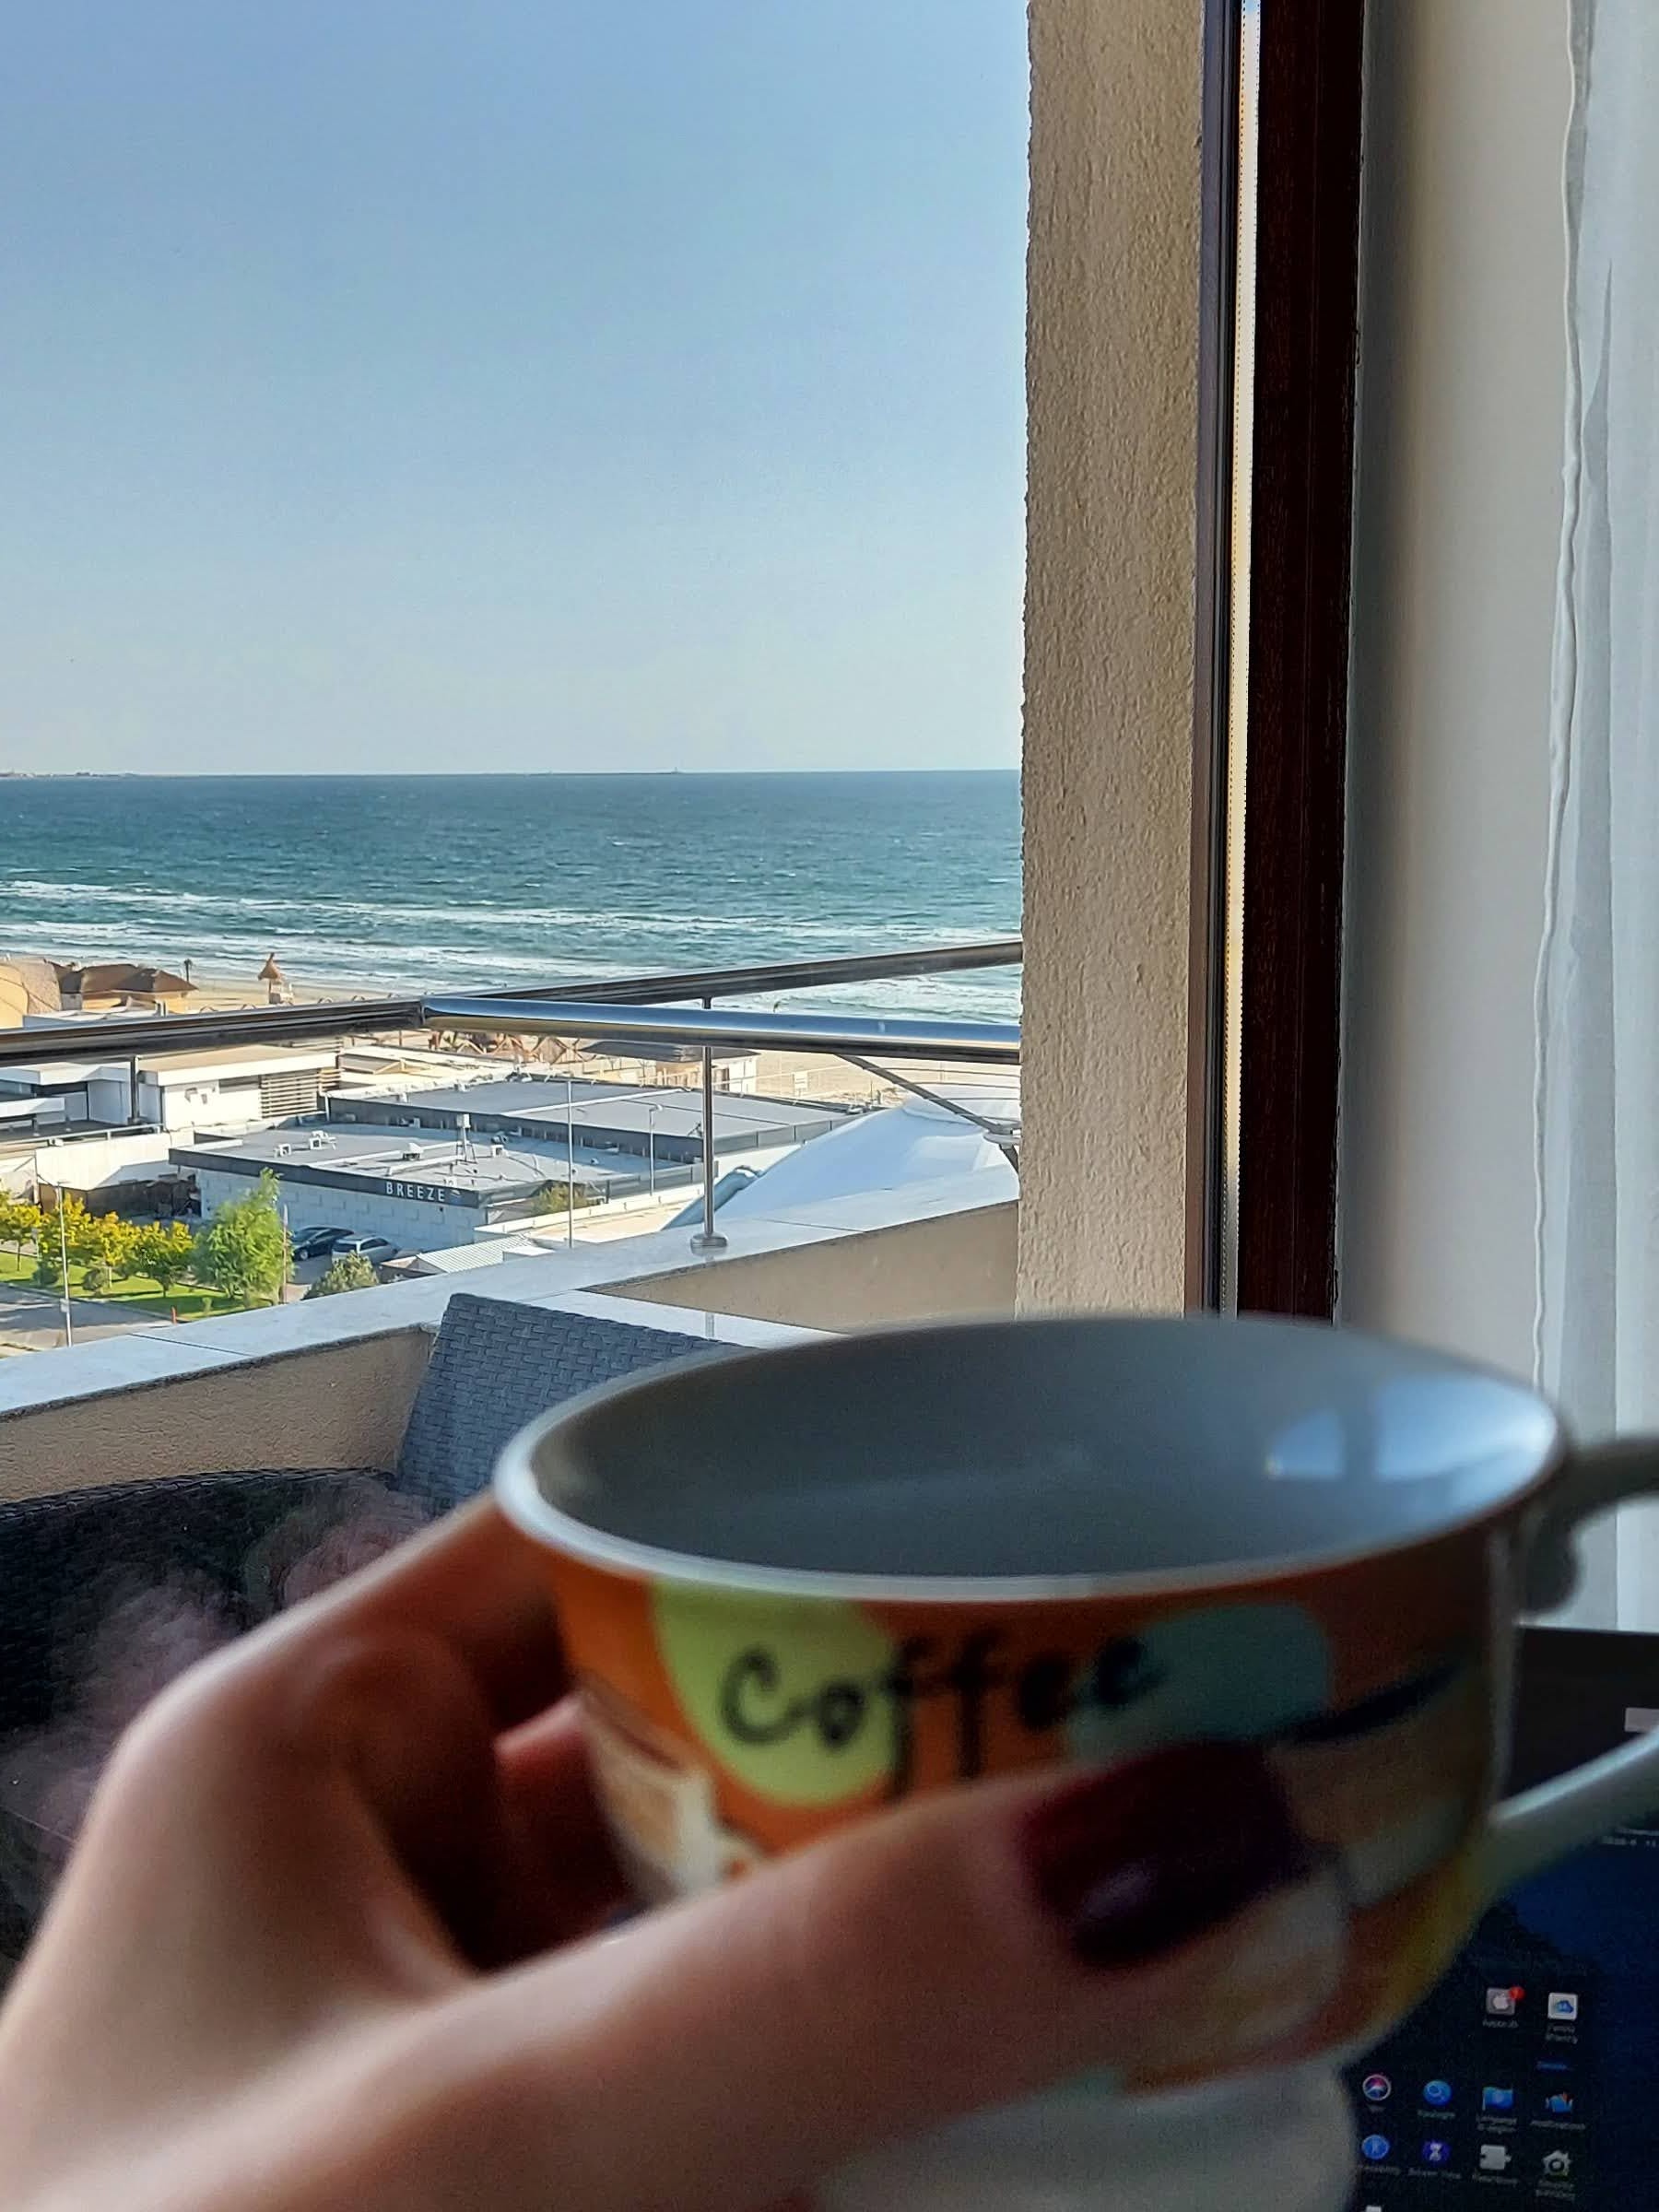 Coffee at sea side